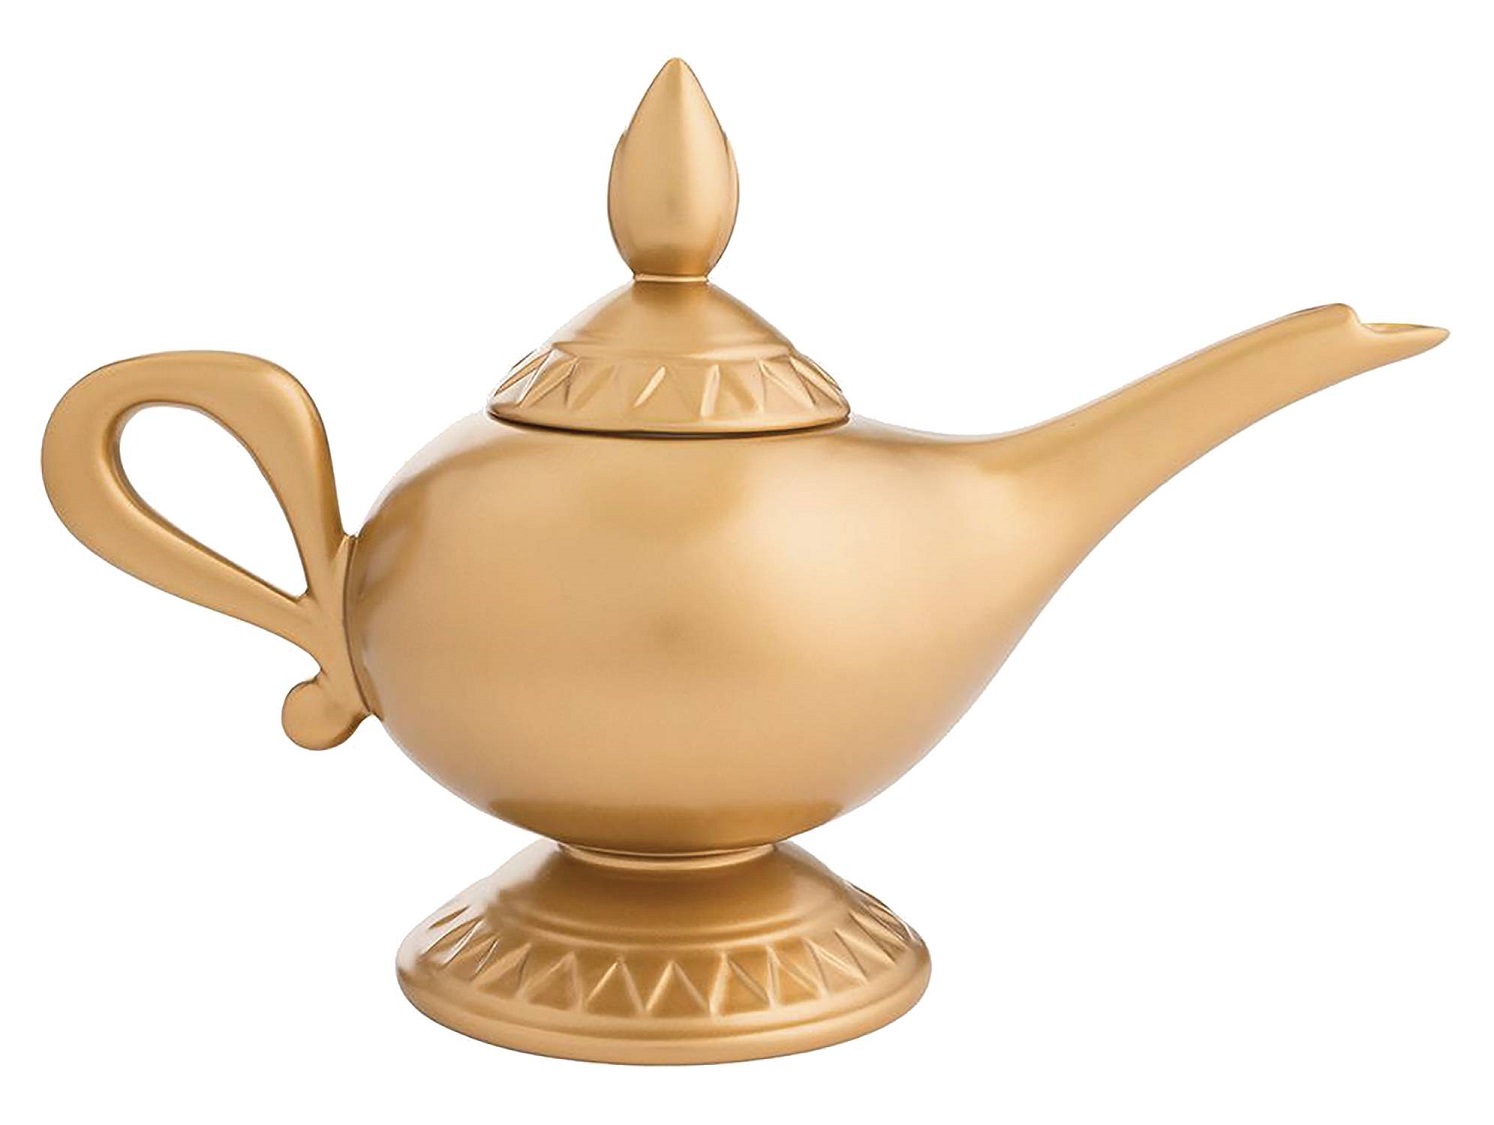 afbreken Reserveren Dierbare Vandor LLC - Disney Aladdin Magic Genie Lamp Replica #VDR-137740